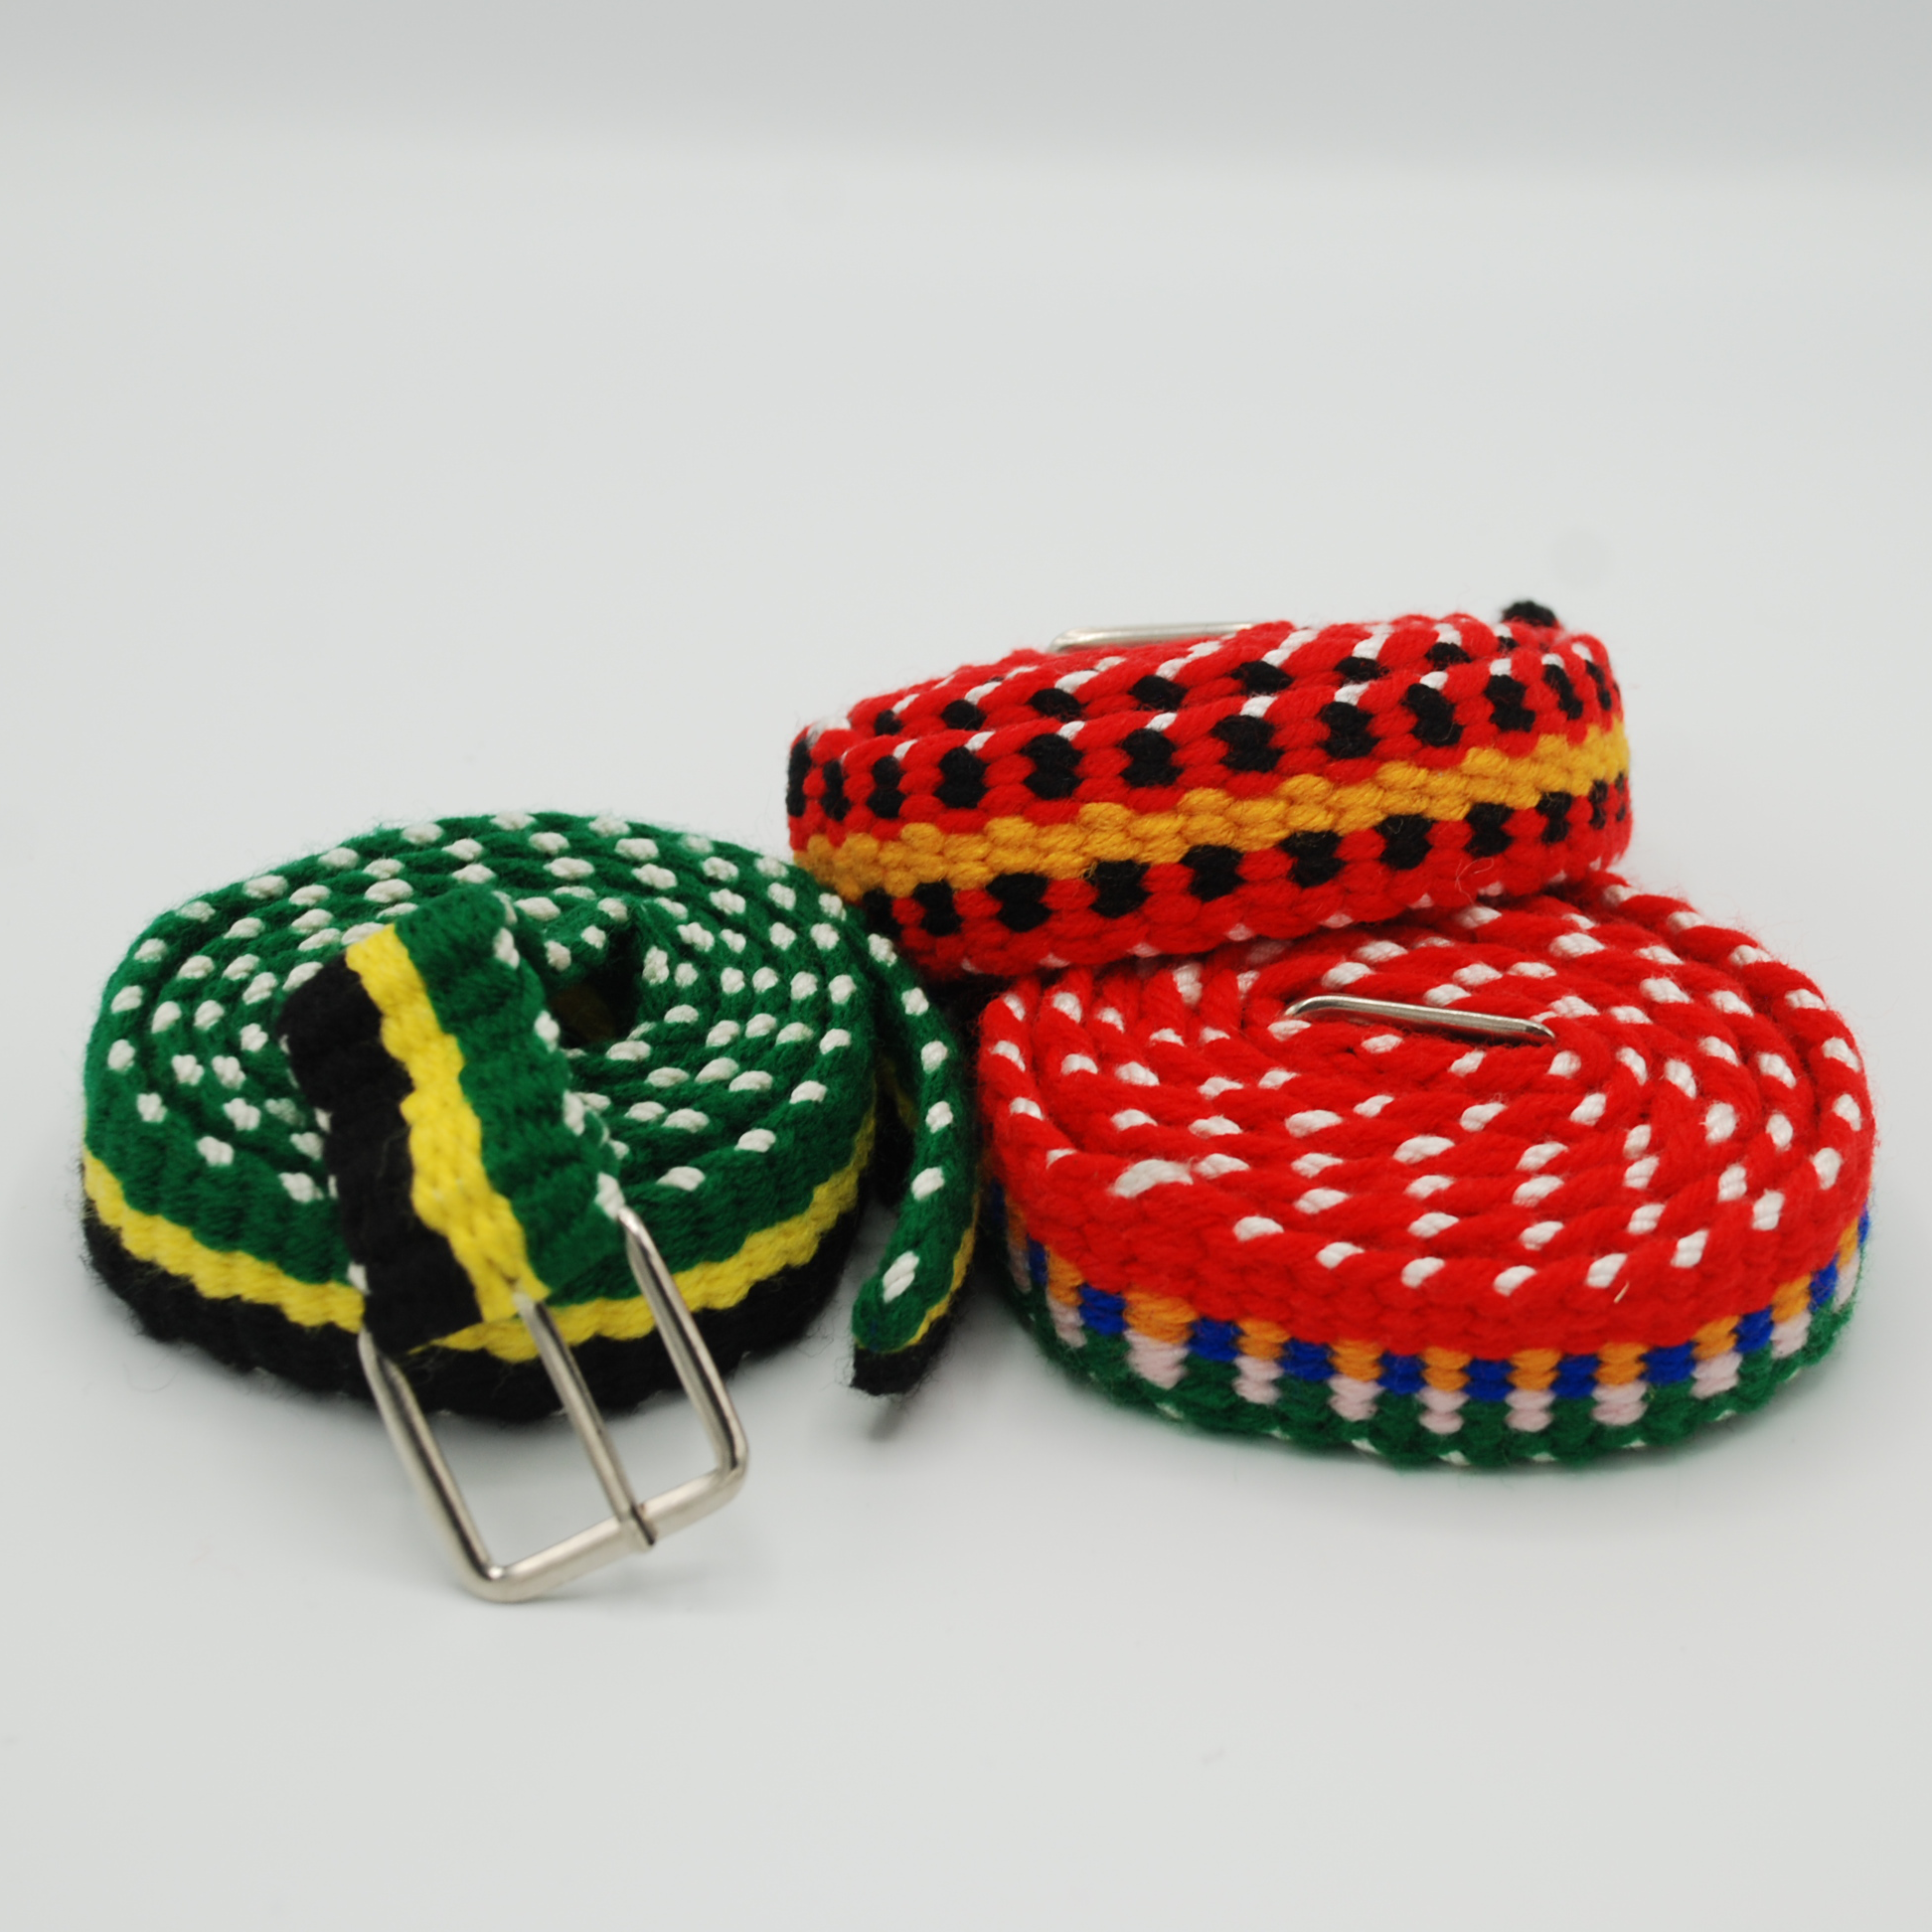 Hand-crafted Rasta Belts